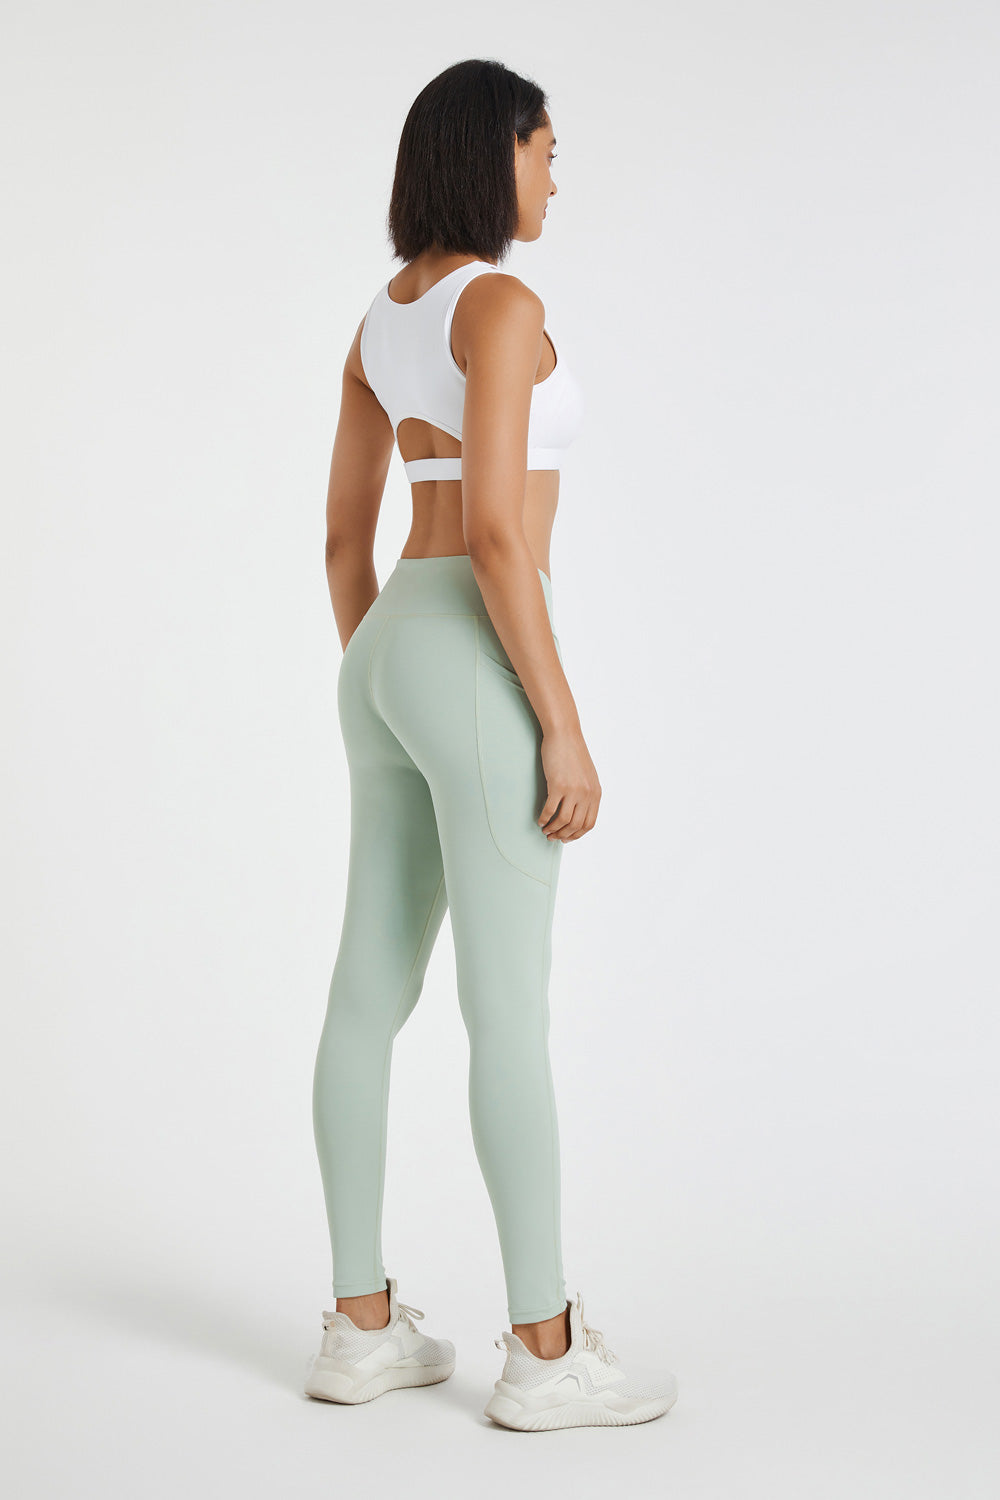 LA7 Women's Stash Pocket High-Rise Four-Way Stretch Legging Green (Small)